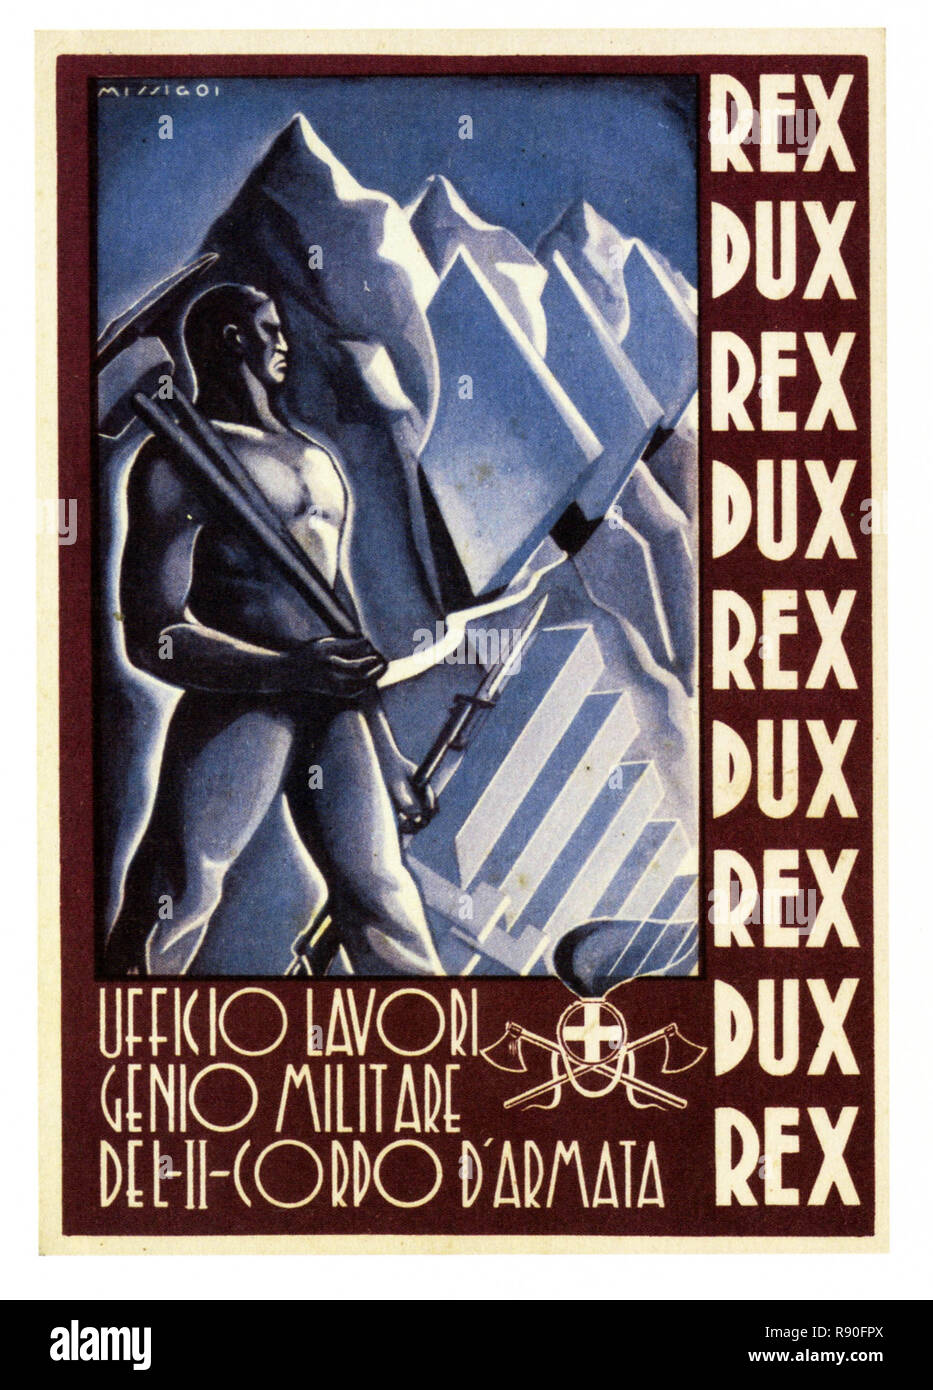 Rexdux Kingleader - Vintage Poster fascista italiano Foto de stock